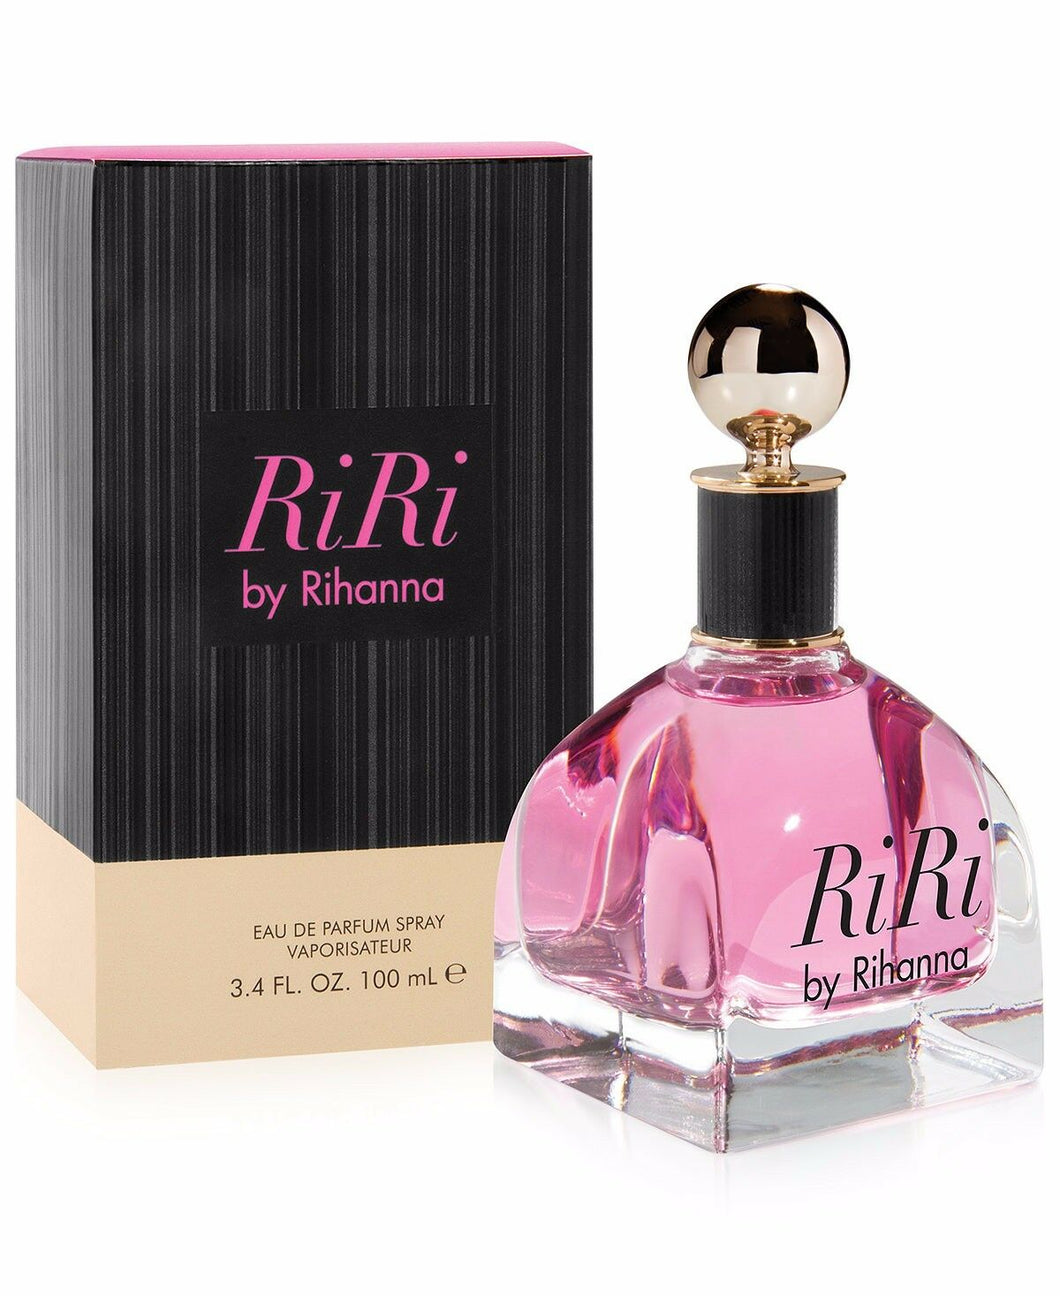 RiRi Perfume by Rihanna 3.4 oz 100 ml EDP Eau de Perfum Spray for Women * SEALED - Perfume Gallery